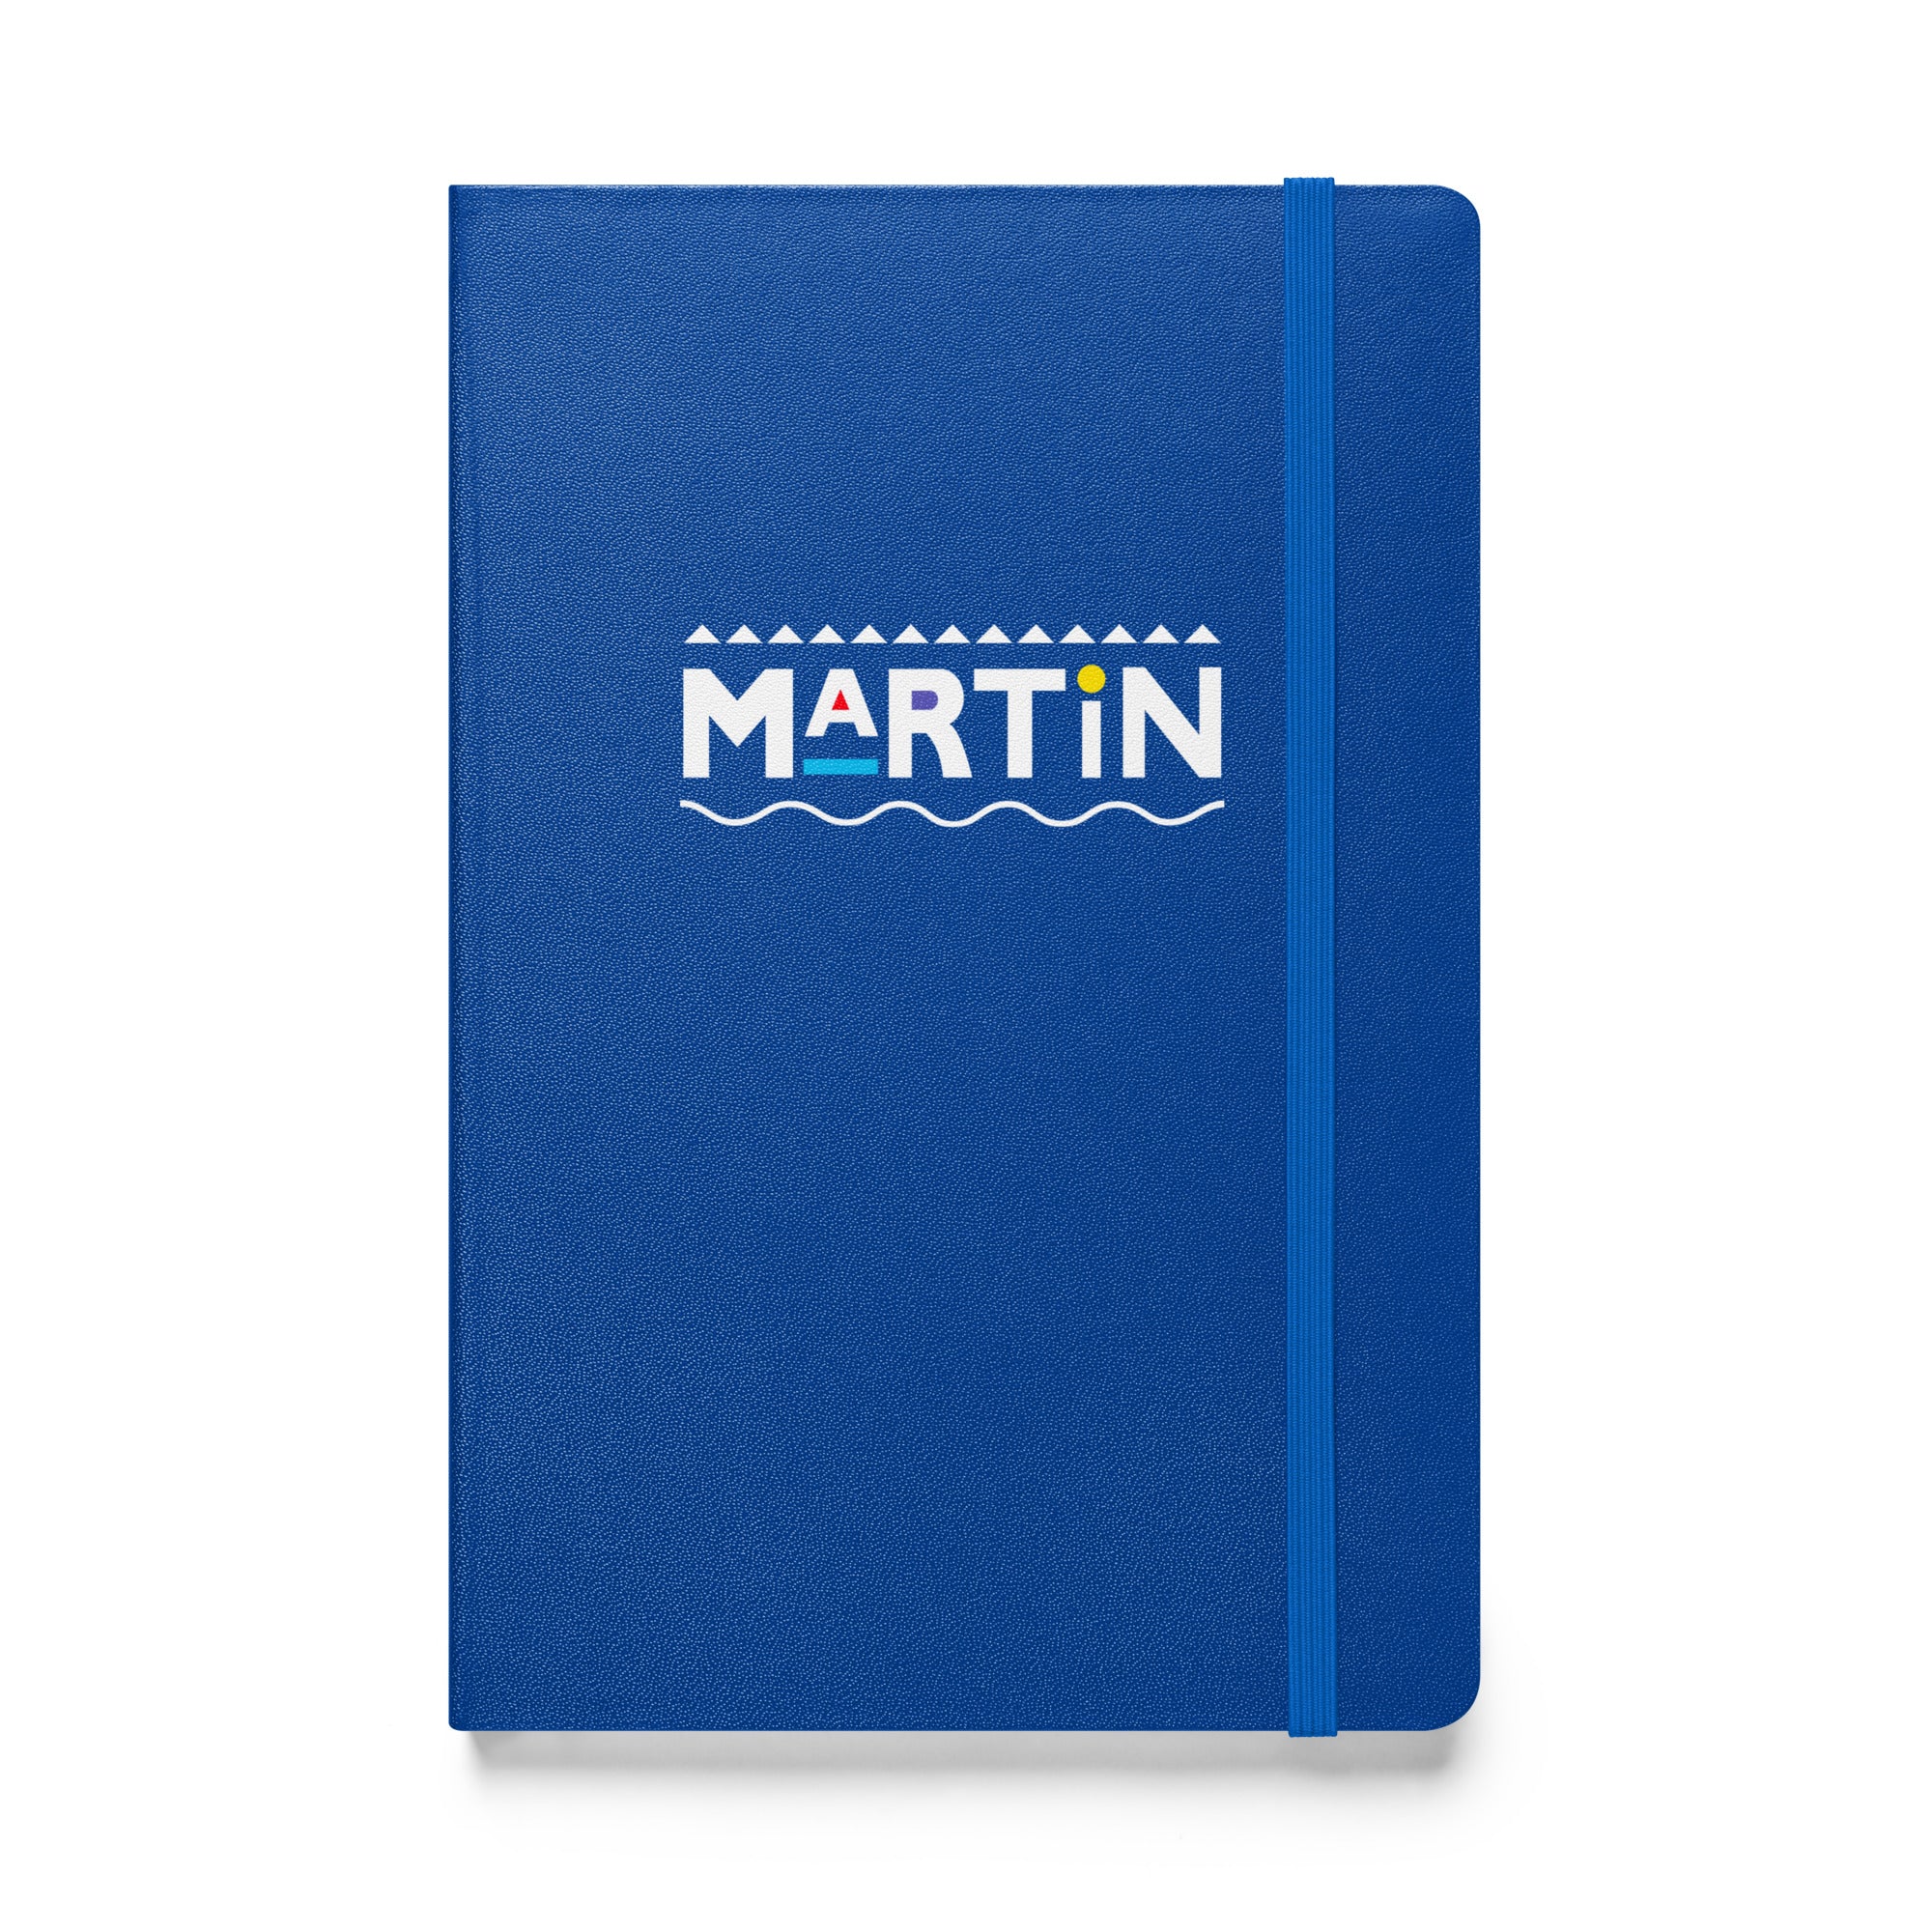 Martin Logo Hardcover Bound Notebook